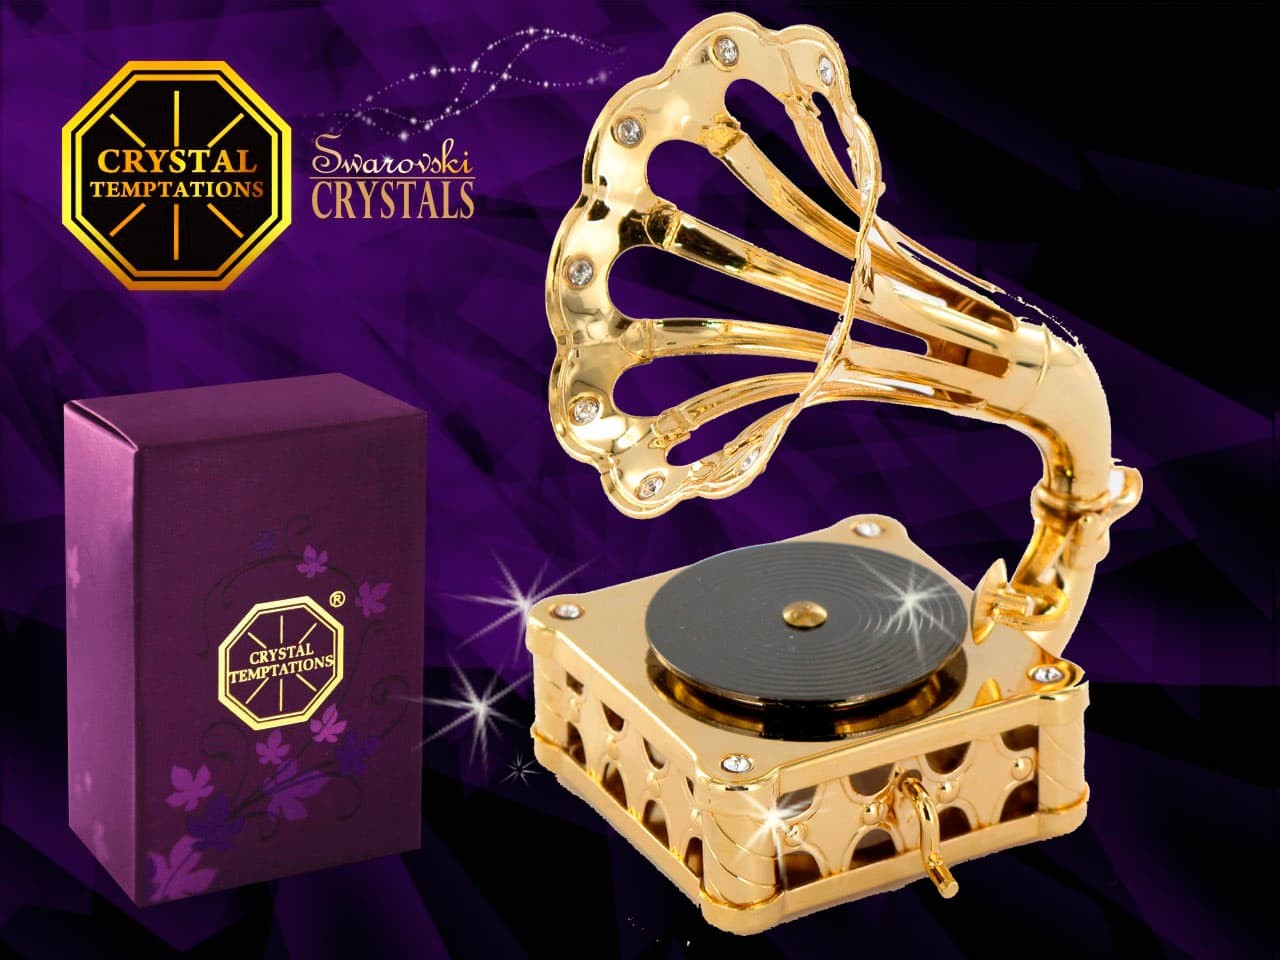 Swarovski Gramofon products with Crystals